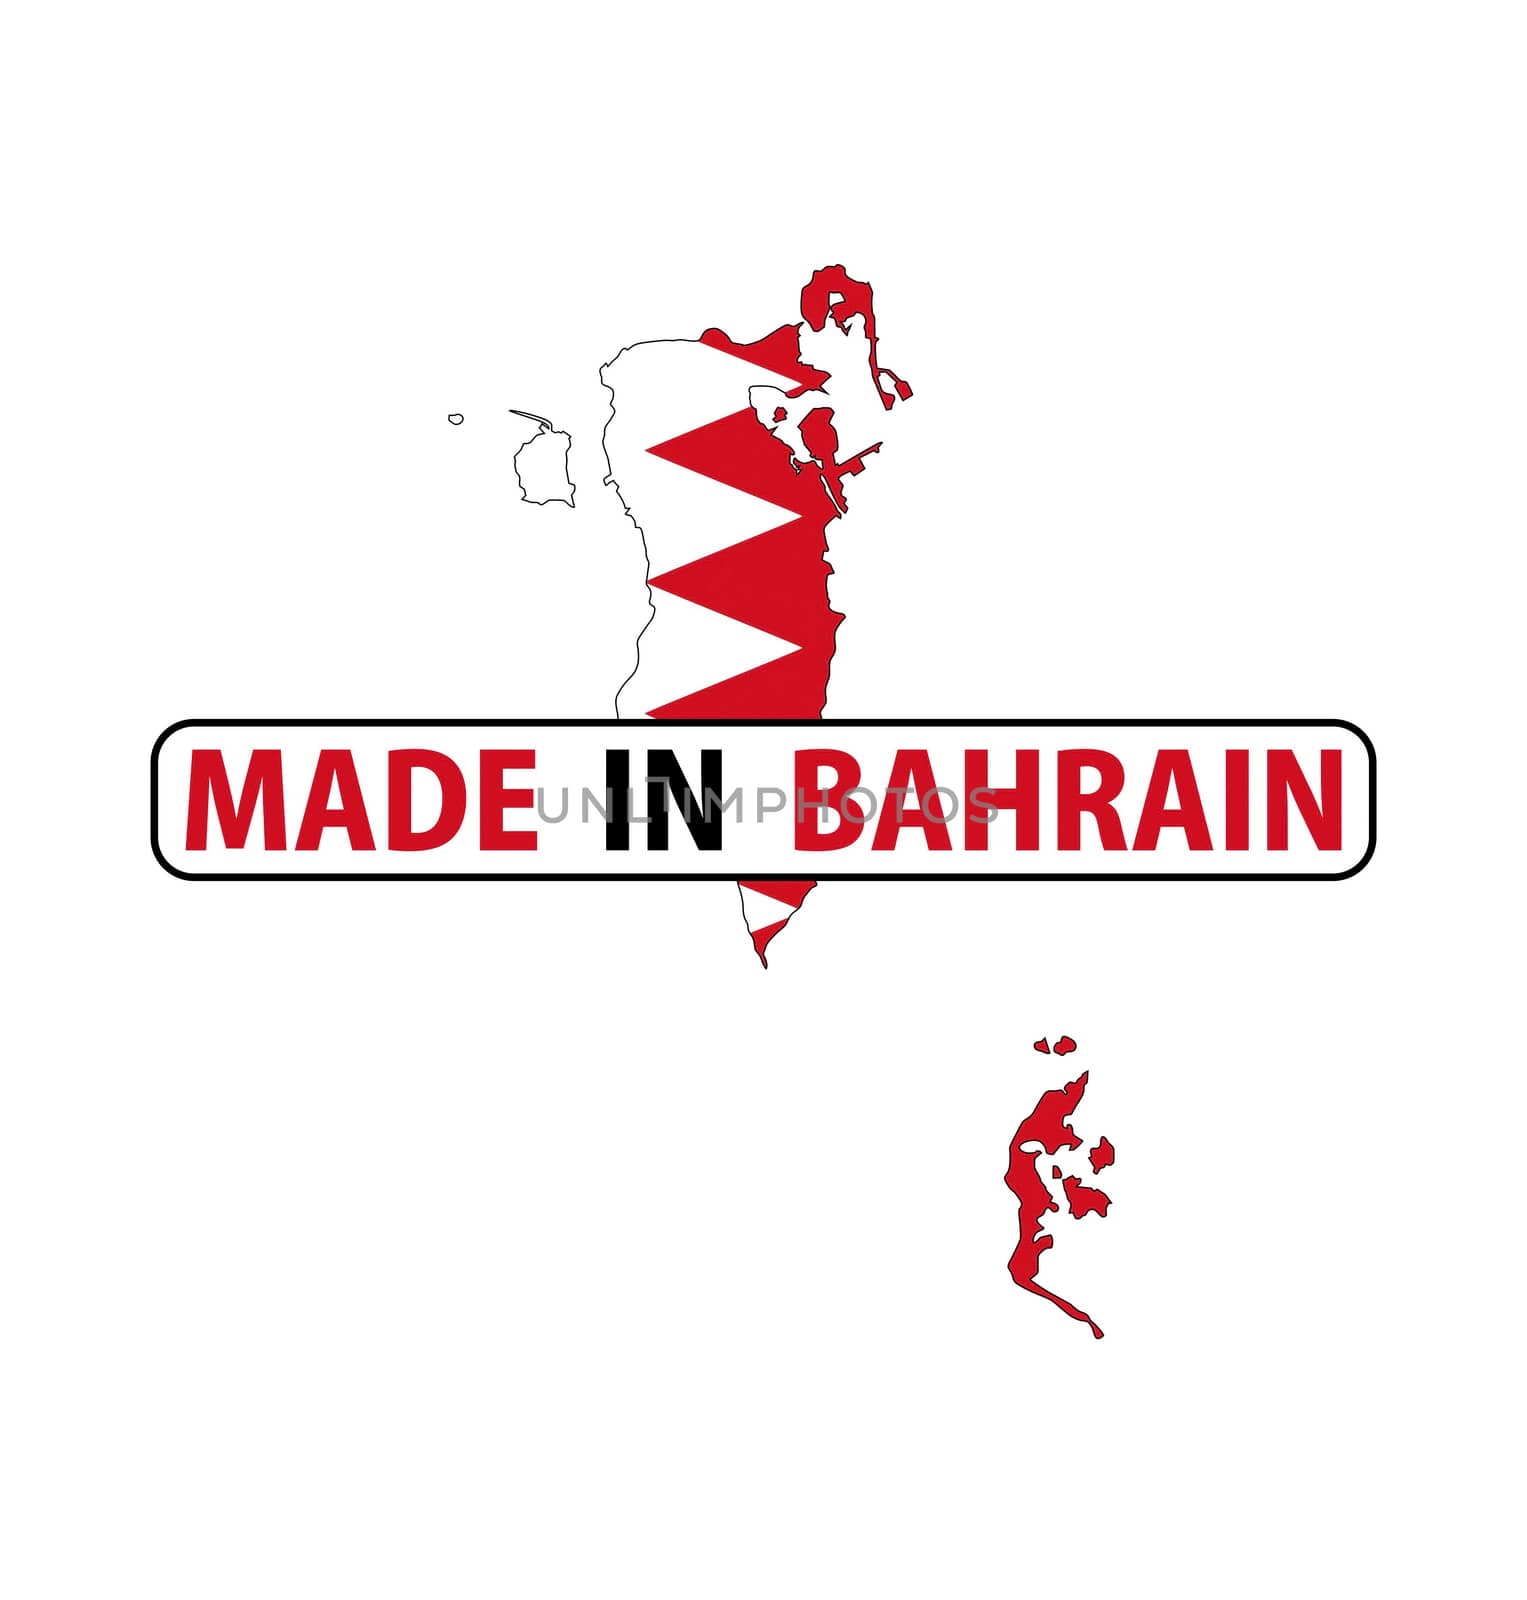 made in bahrain by tony4urban